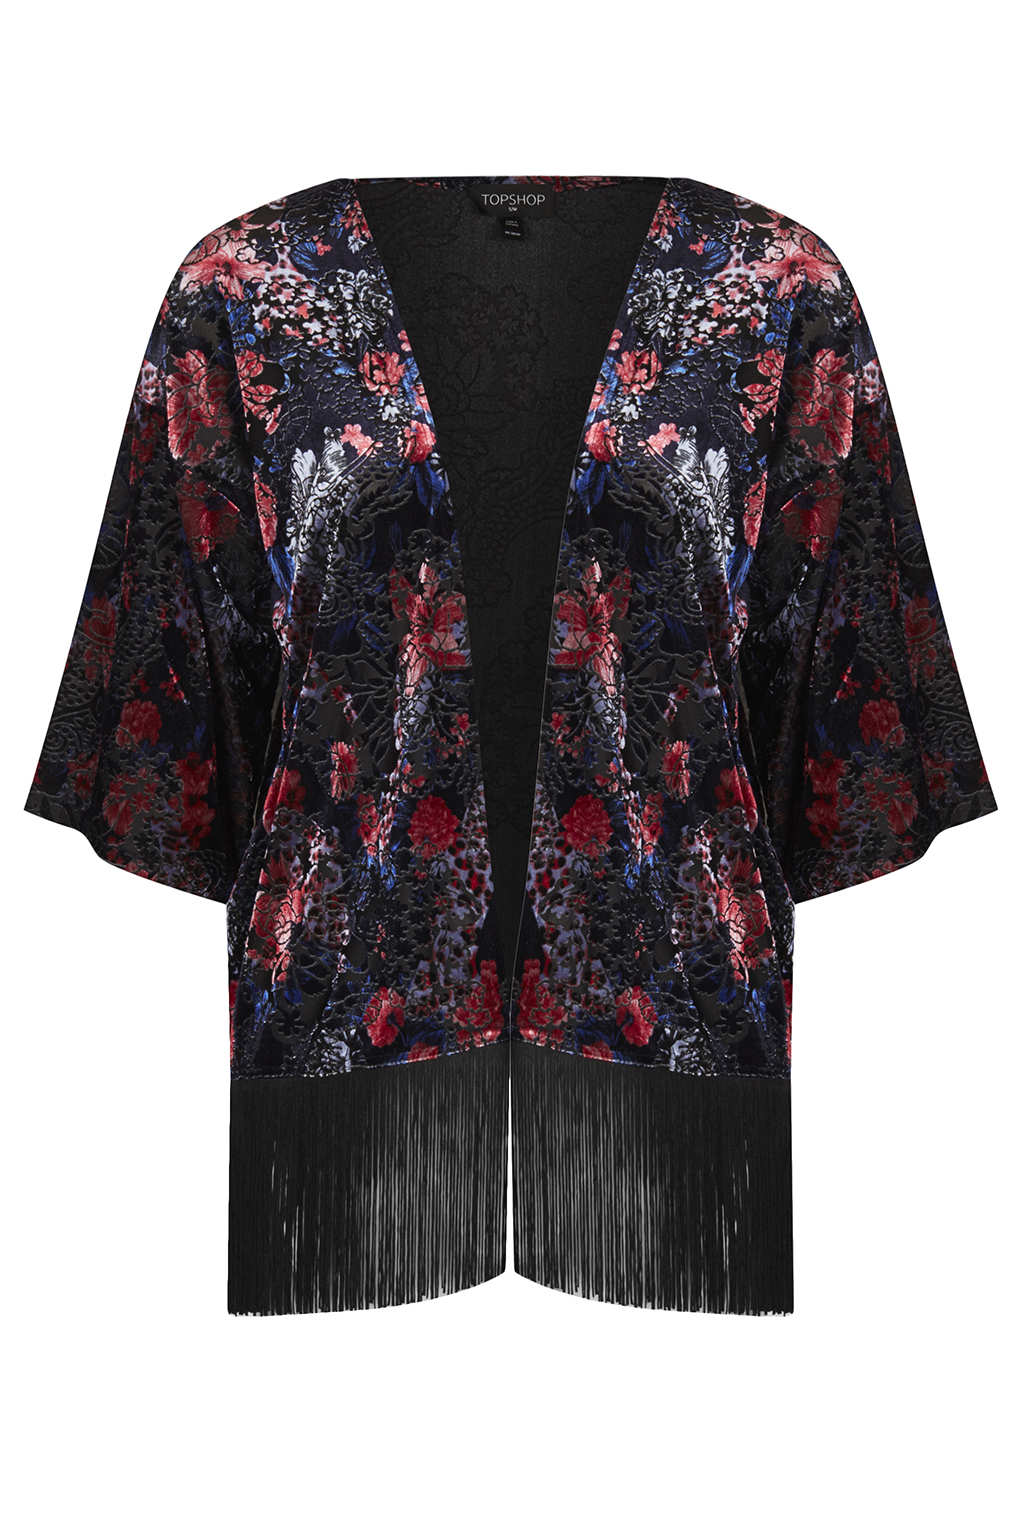 TOPSHOP Floral Velvet Kimono - Lyst